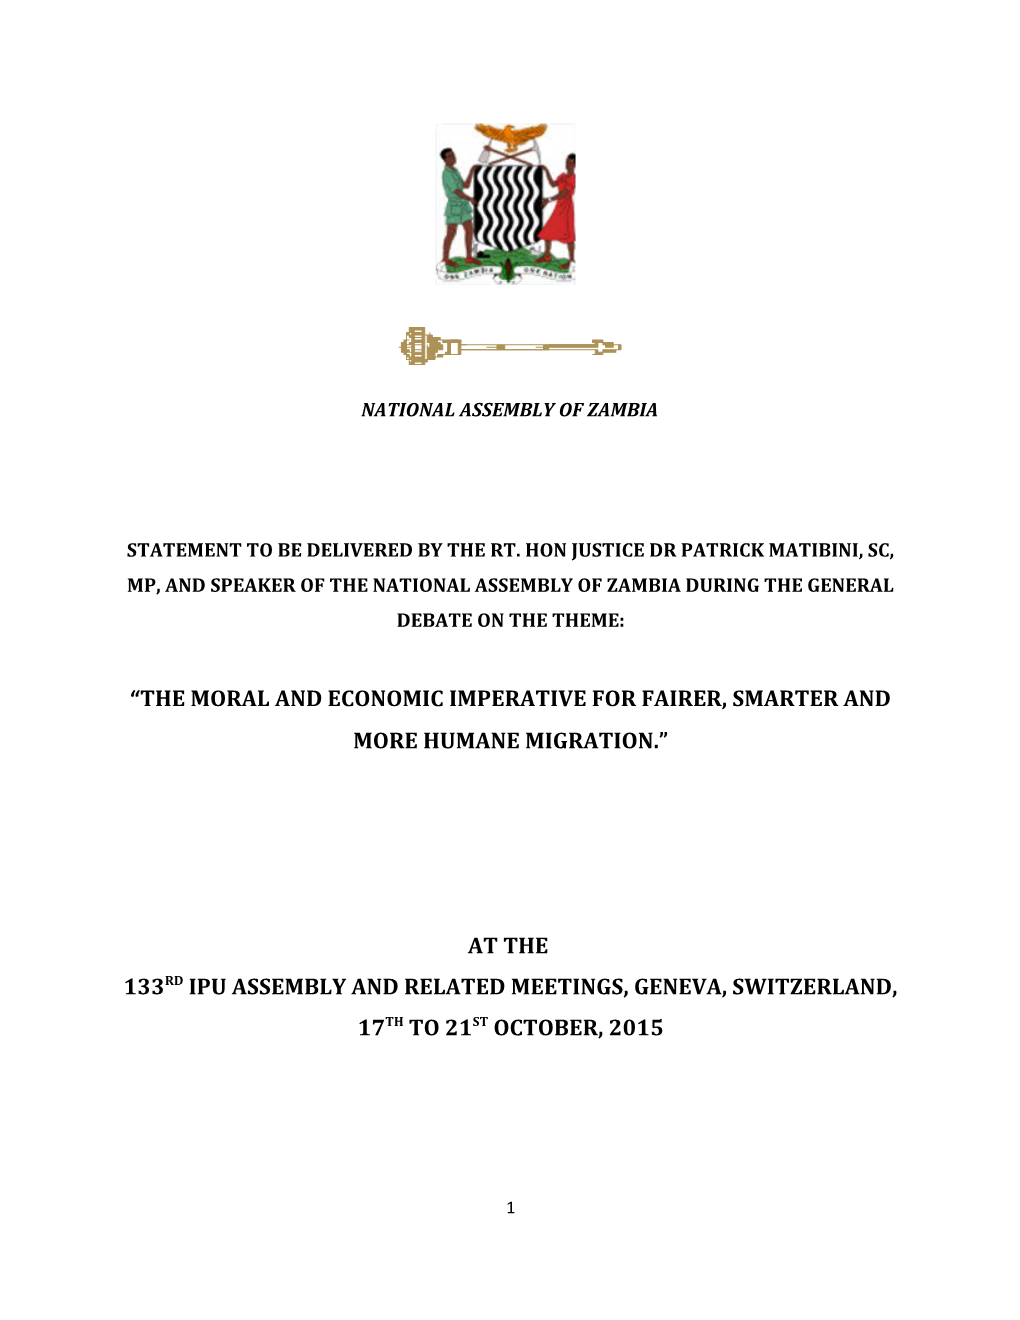 National Assembly of Zambia